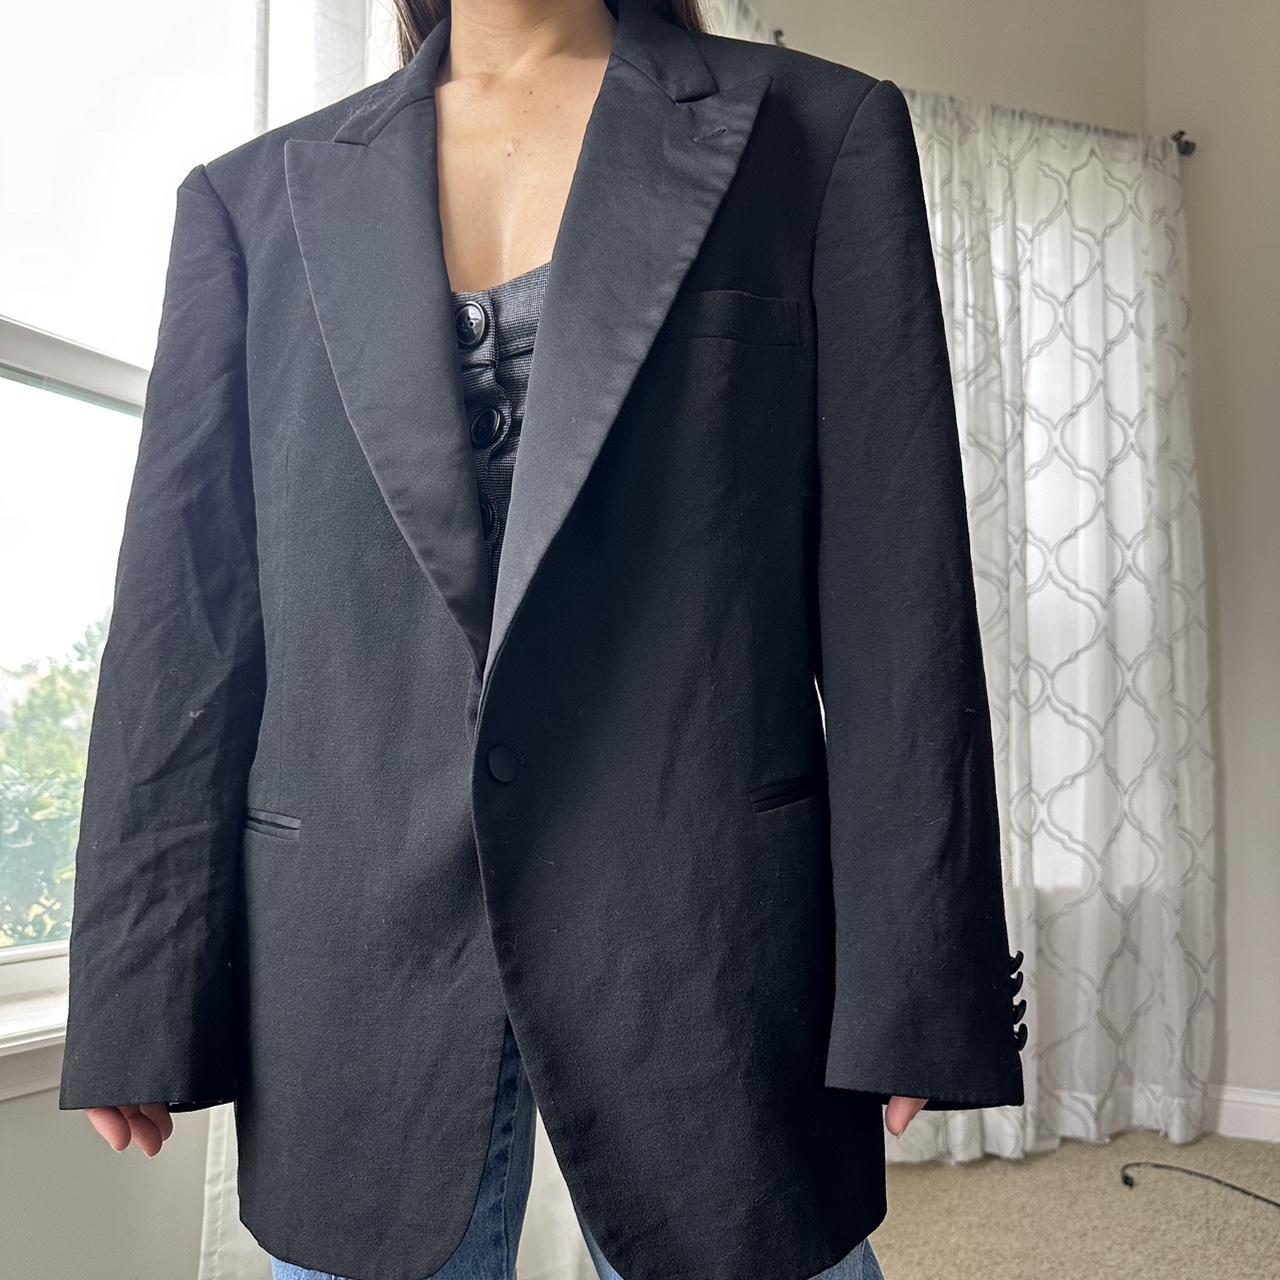 Christian Dior Women's Black Jacket